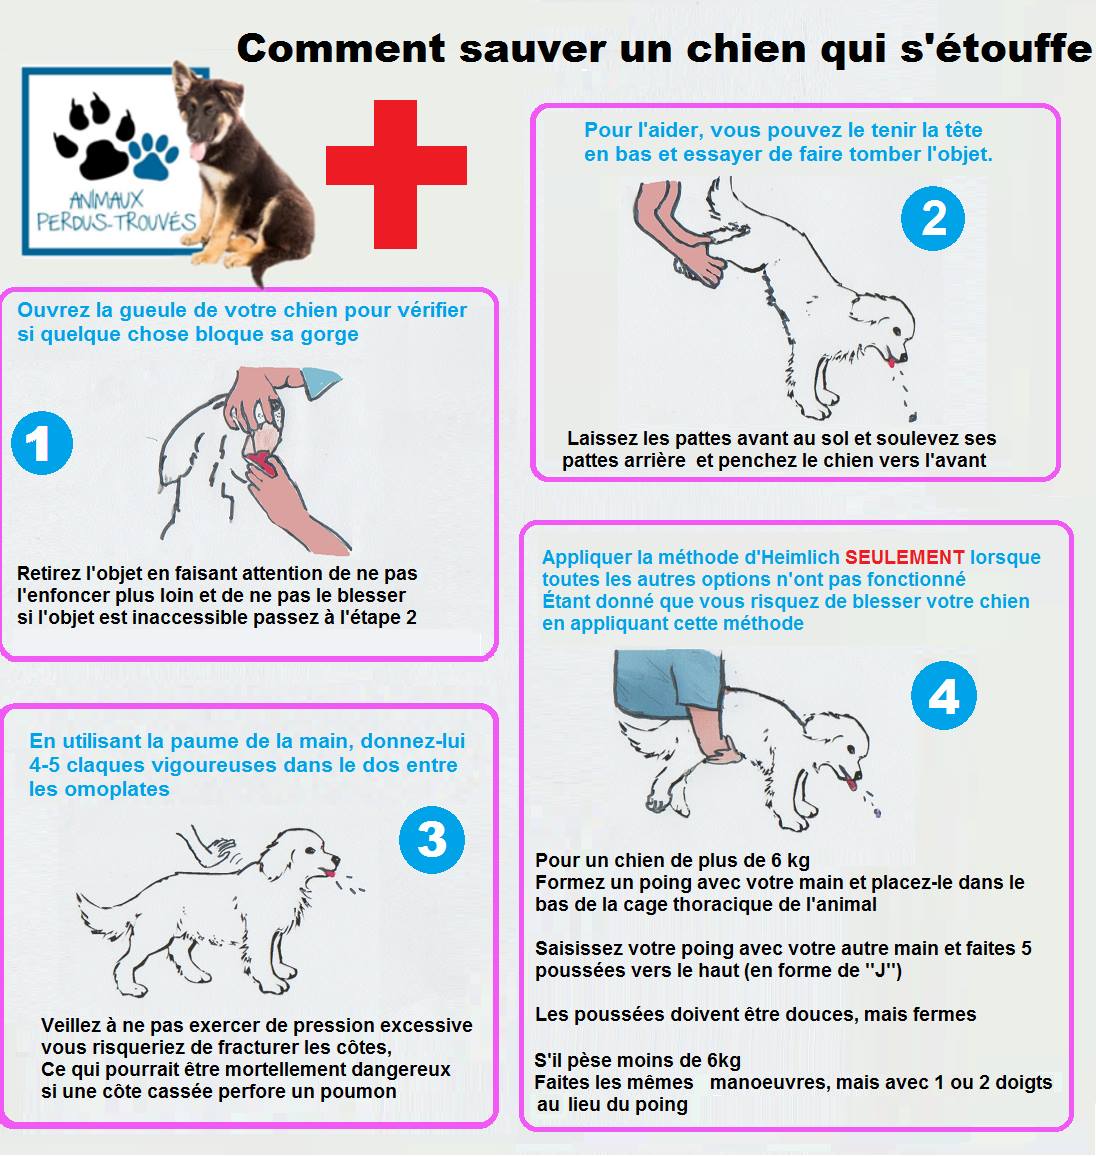 K9 RCR Canine Comment Effectuer La RCR Canine Autres Manoeuvres Vitales